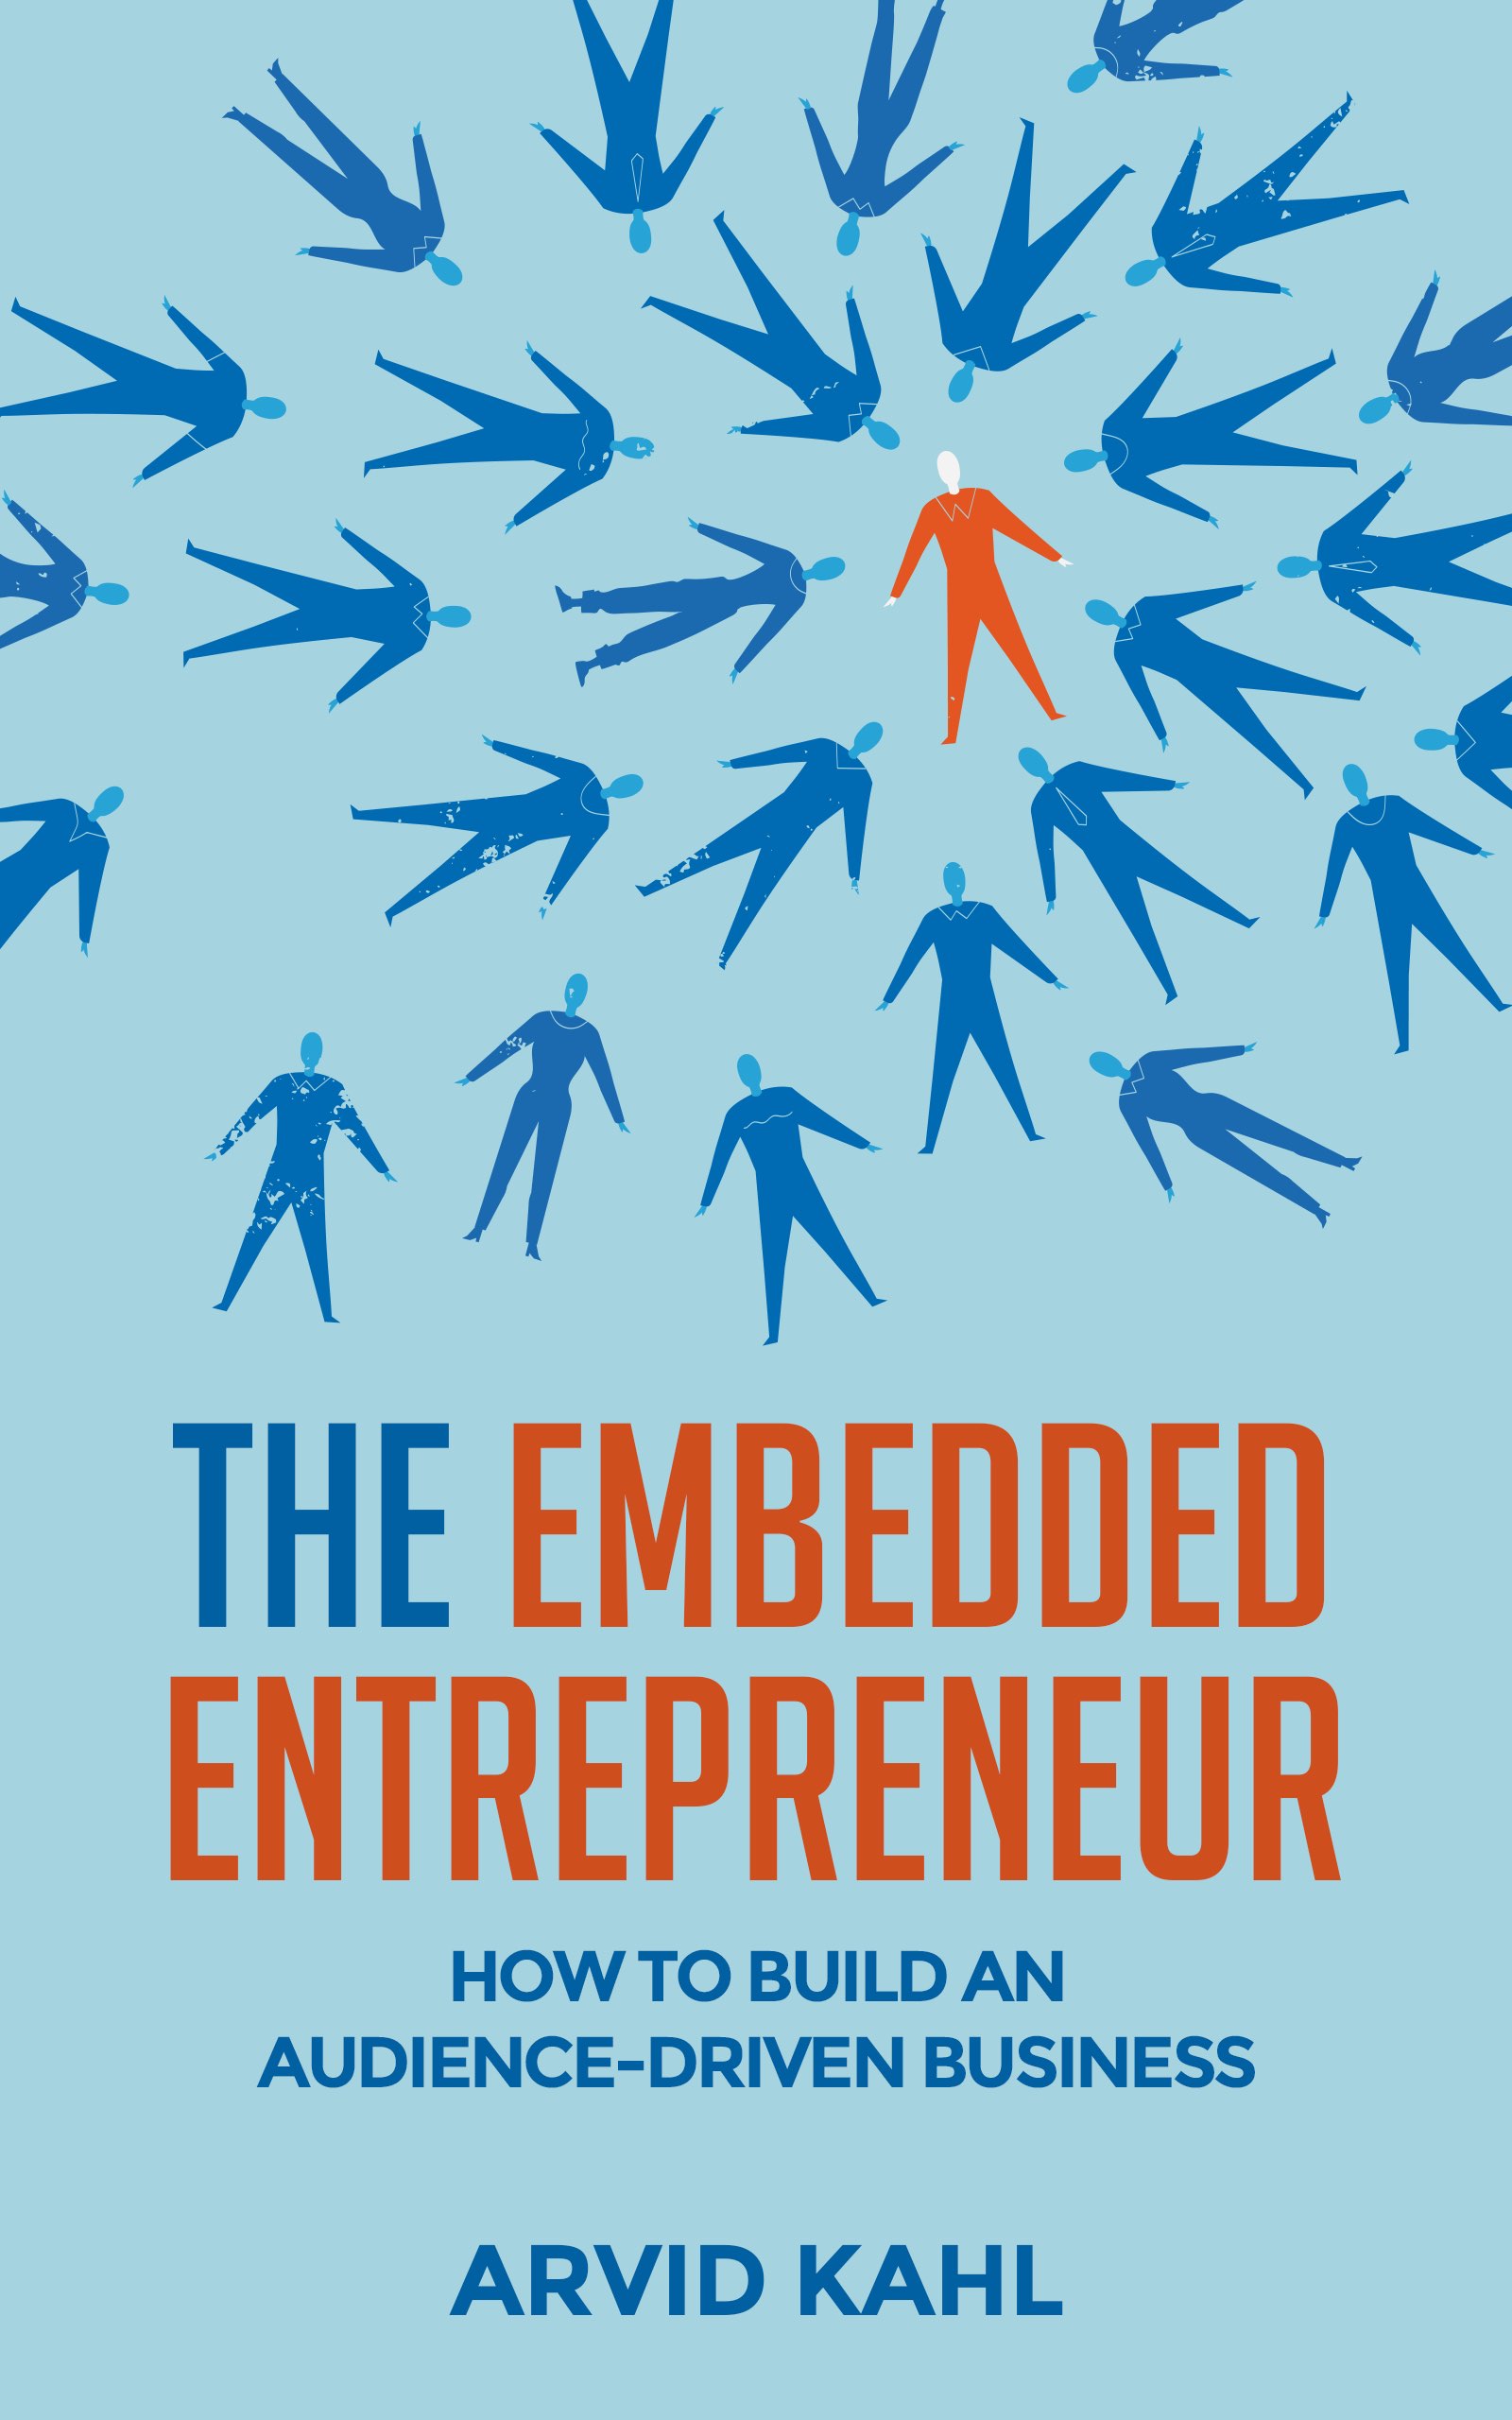 The Embedded Entrepreneur by Arvid Kahl